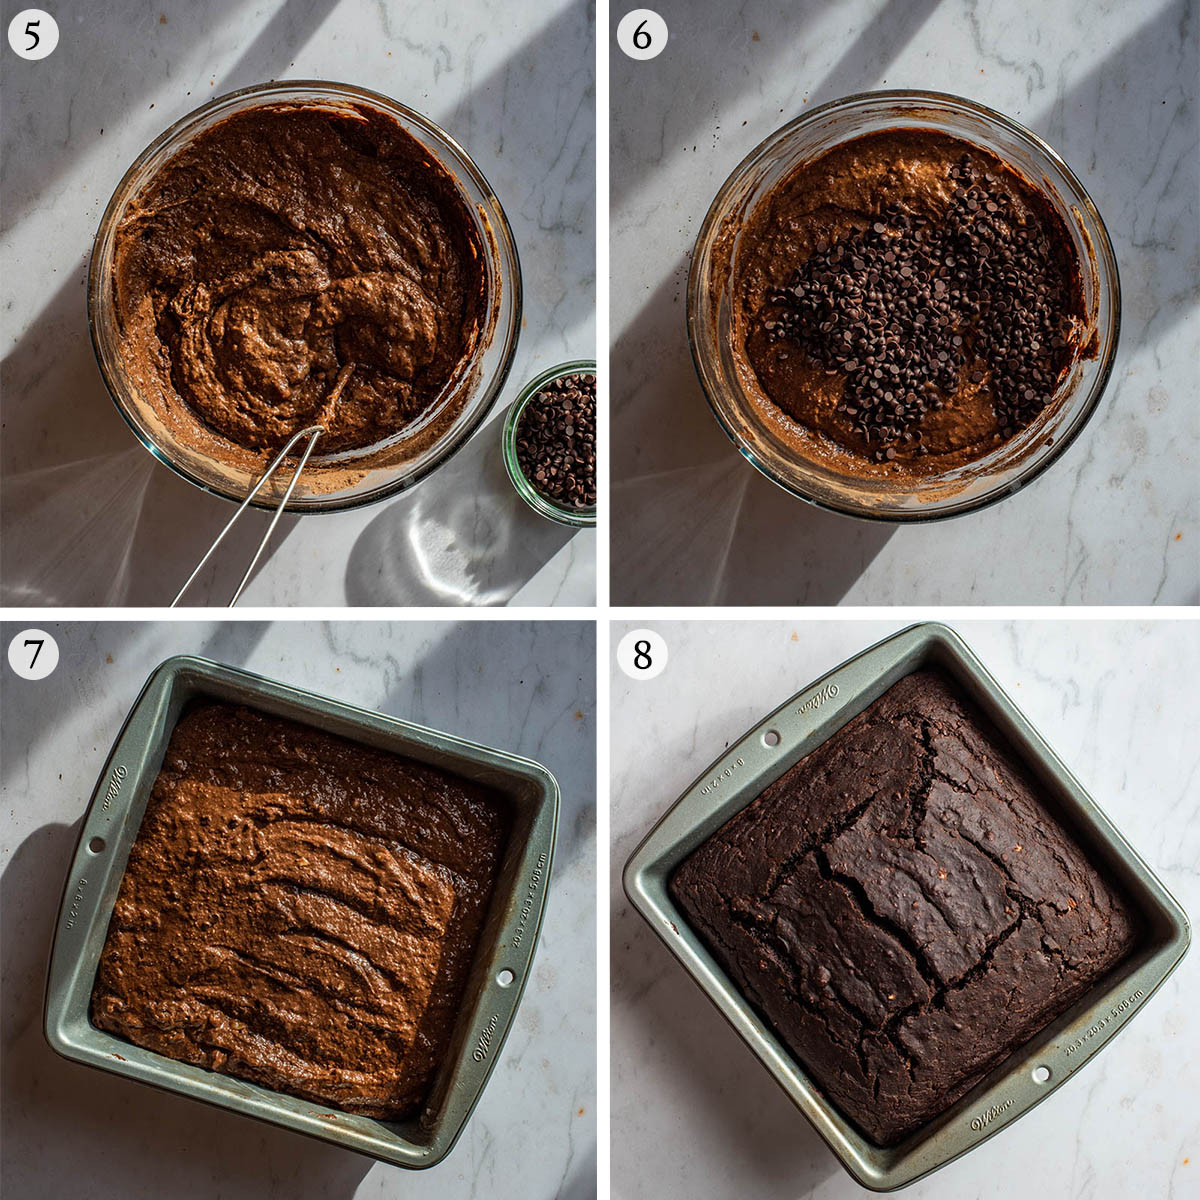 Chocolate snack cake steps 5-8.